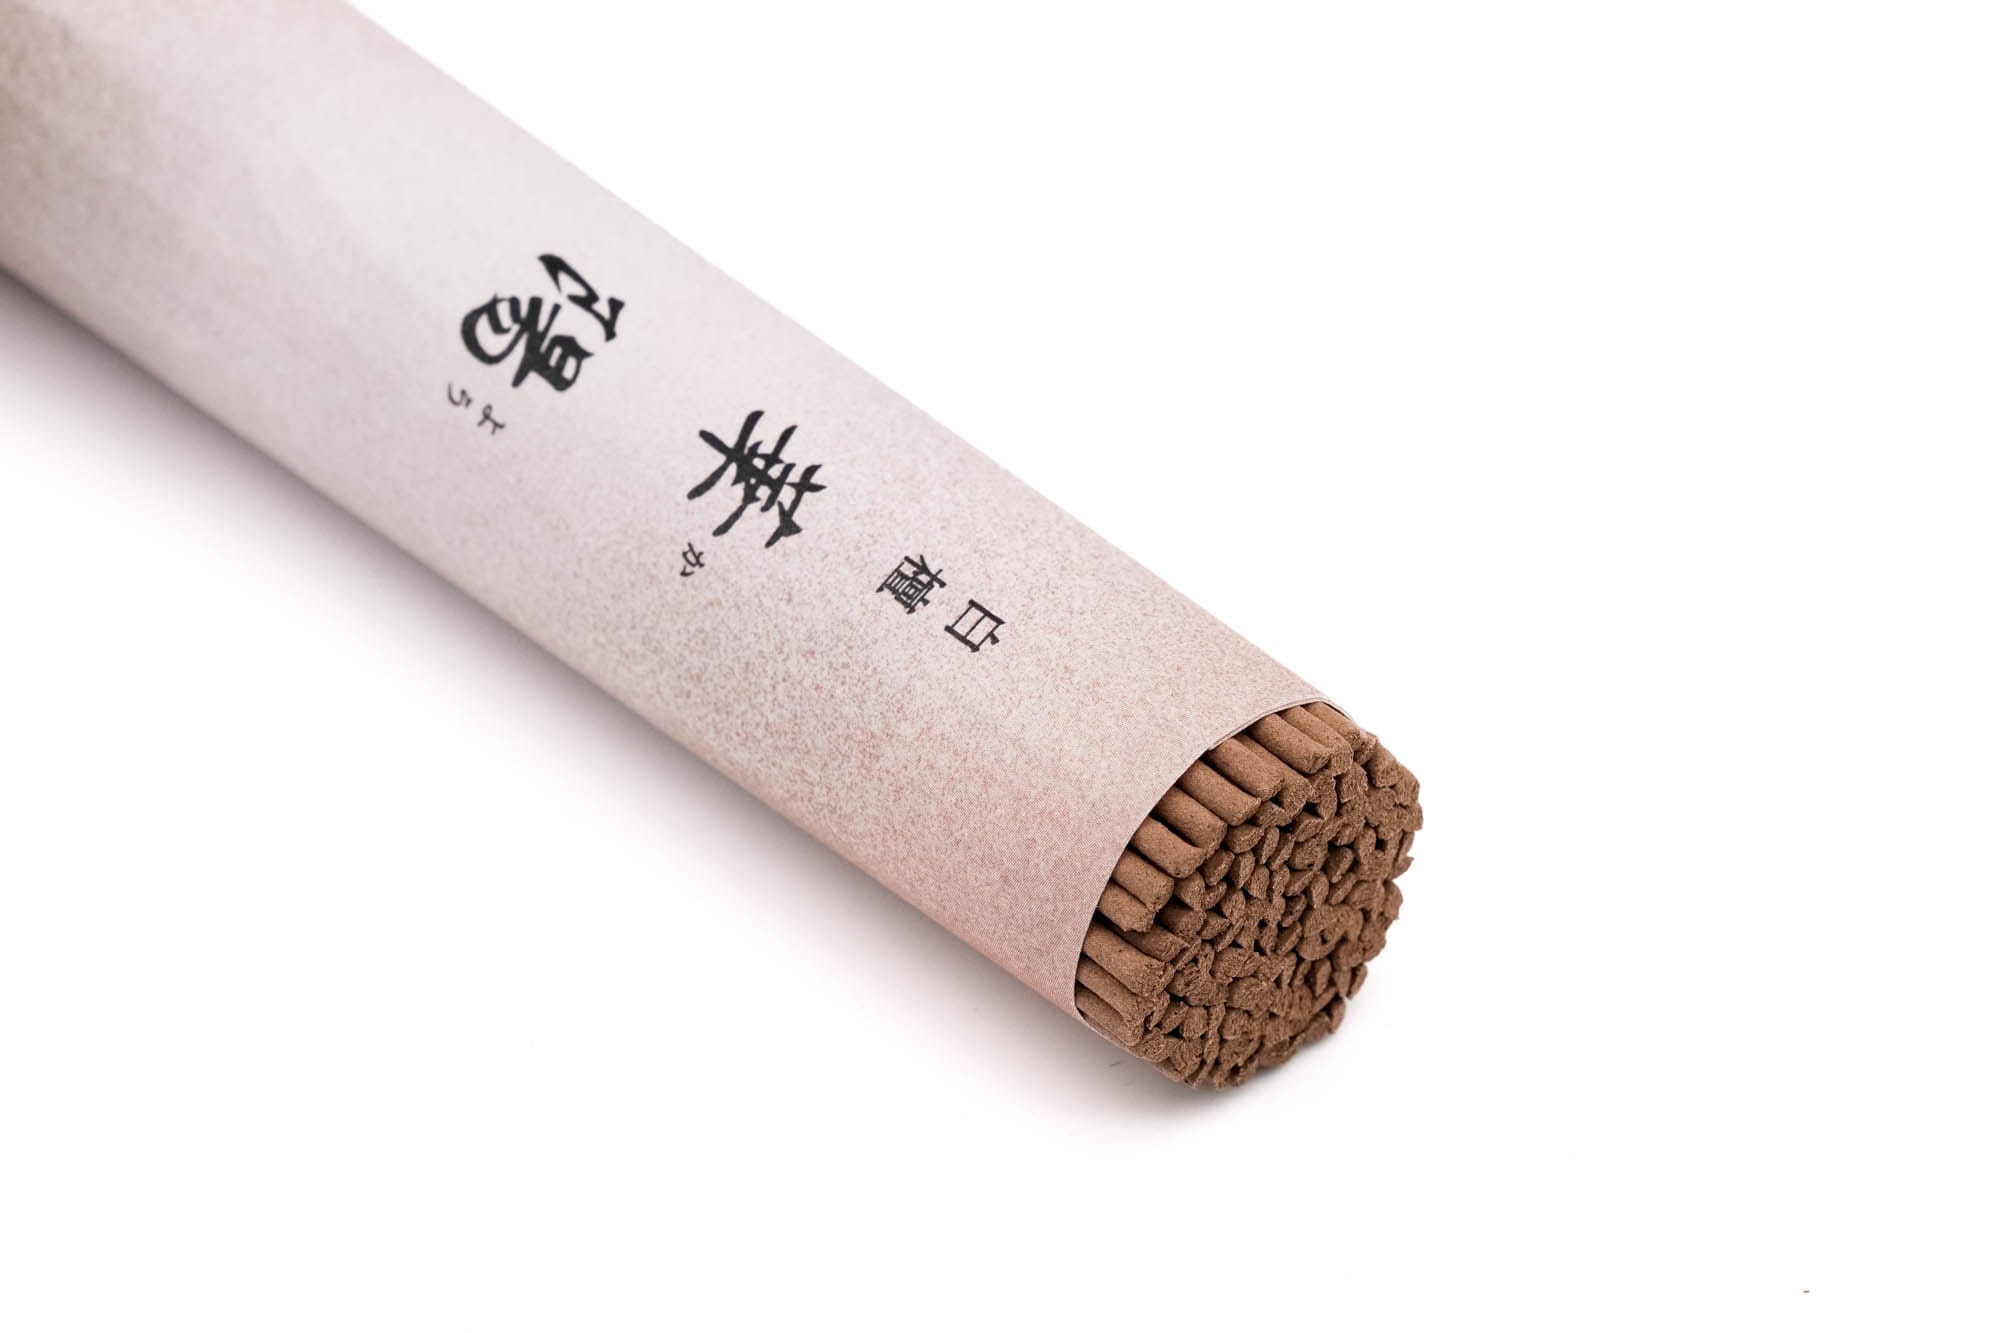 山田松 Yamadamatsu - Kayō Sandalwood Incense Sticks